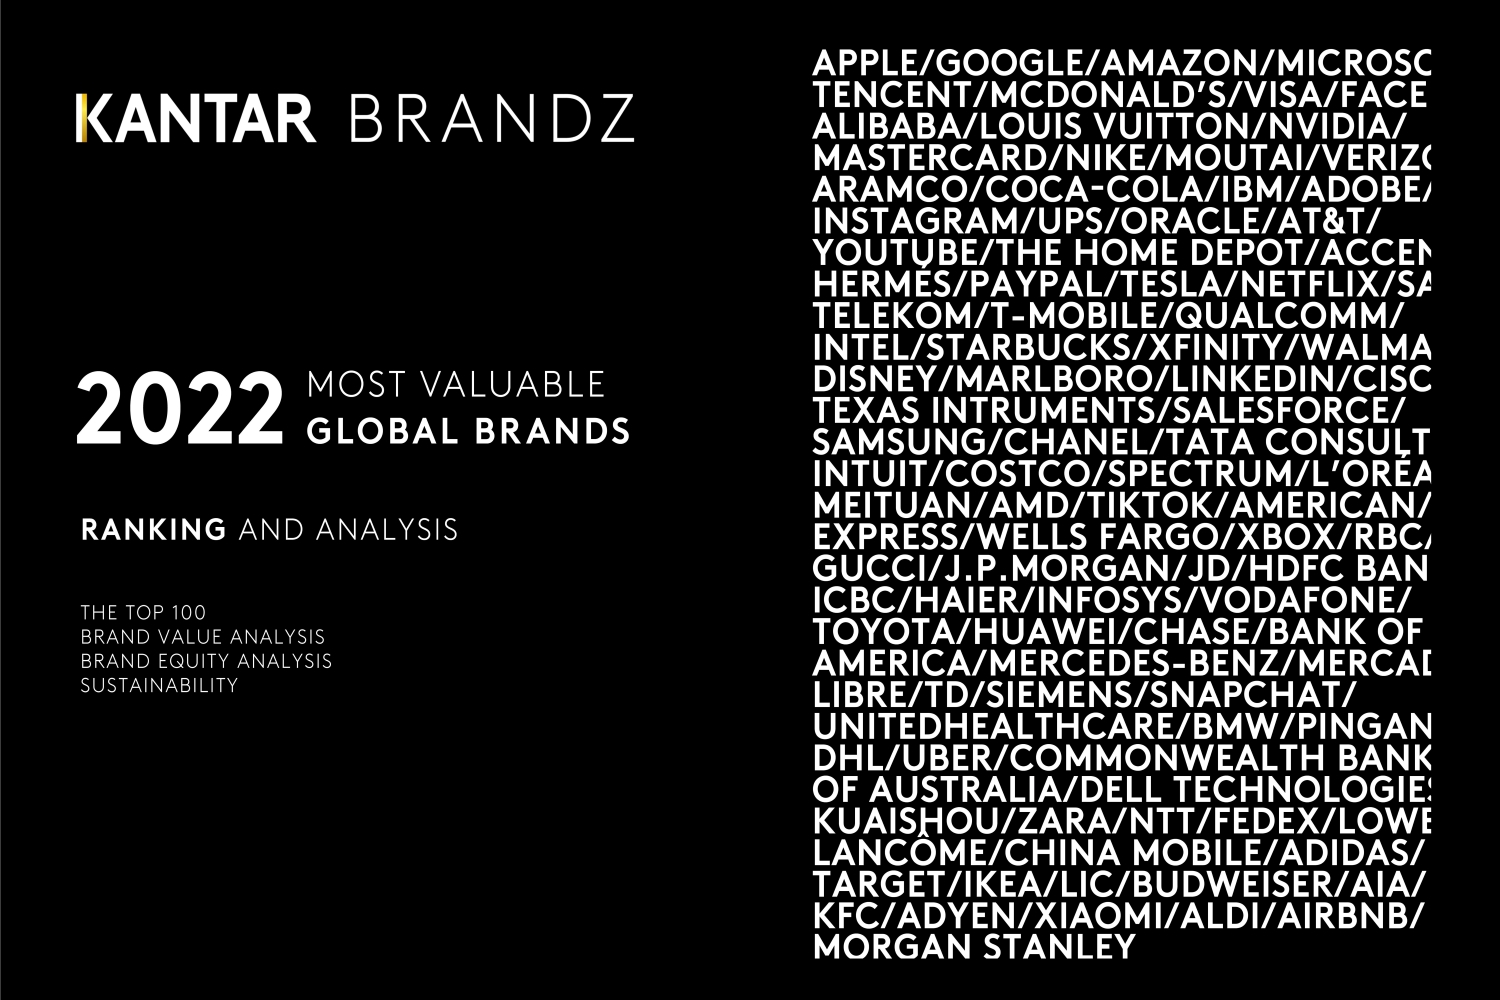 https://www.kantar.com/en-cn/-/media/project/kantar/china/campaigns-china/2022-brandz-top-100-most-valuable-global-brands-en.jpg